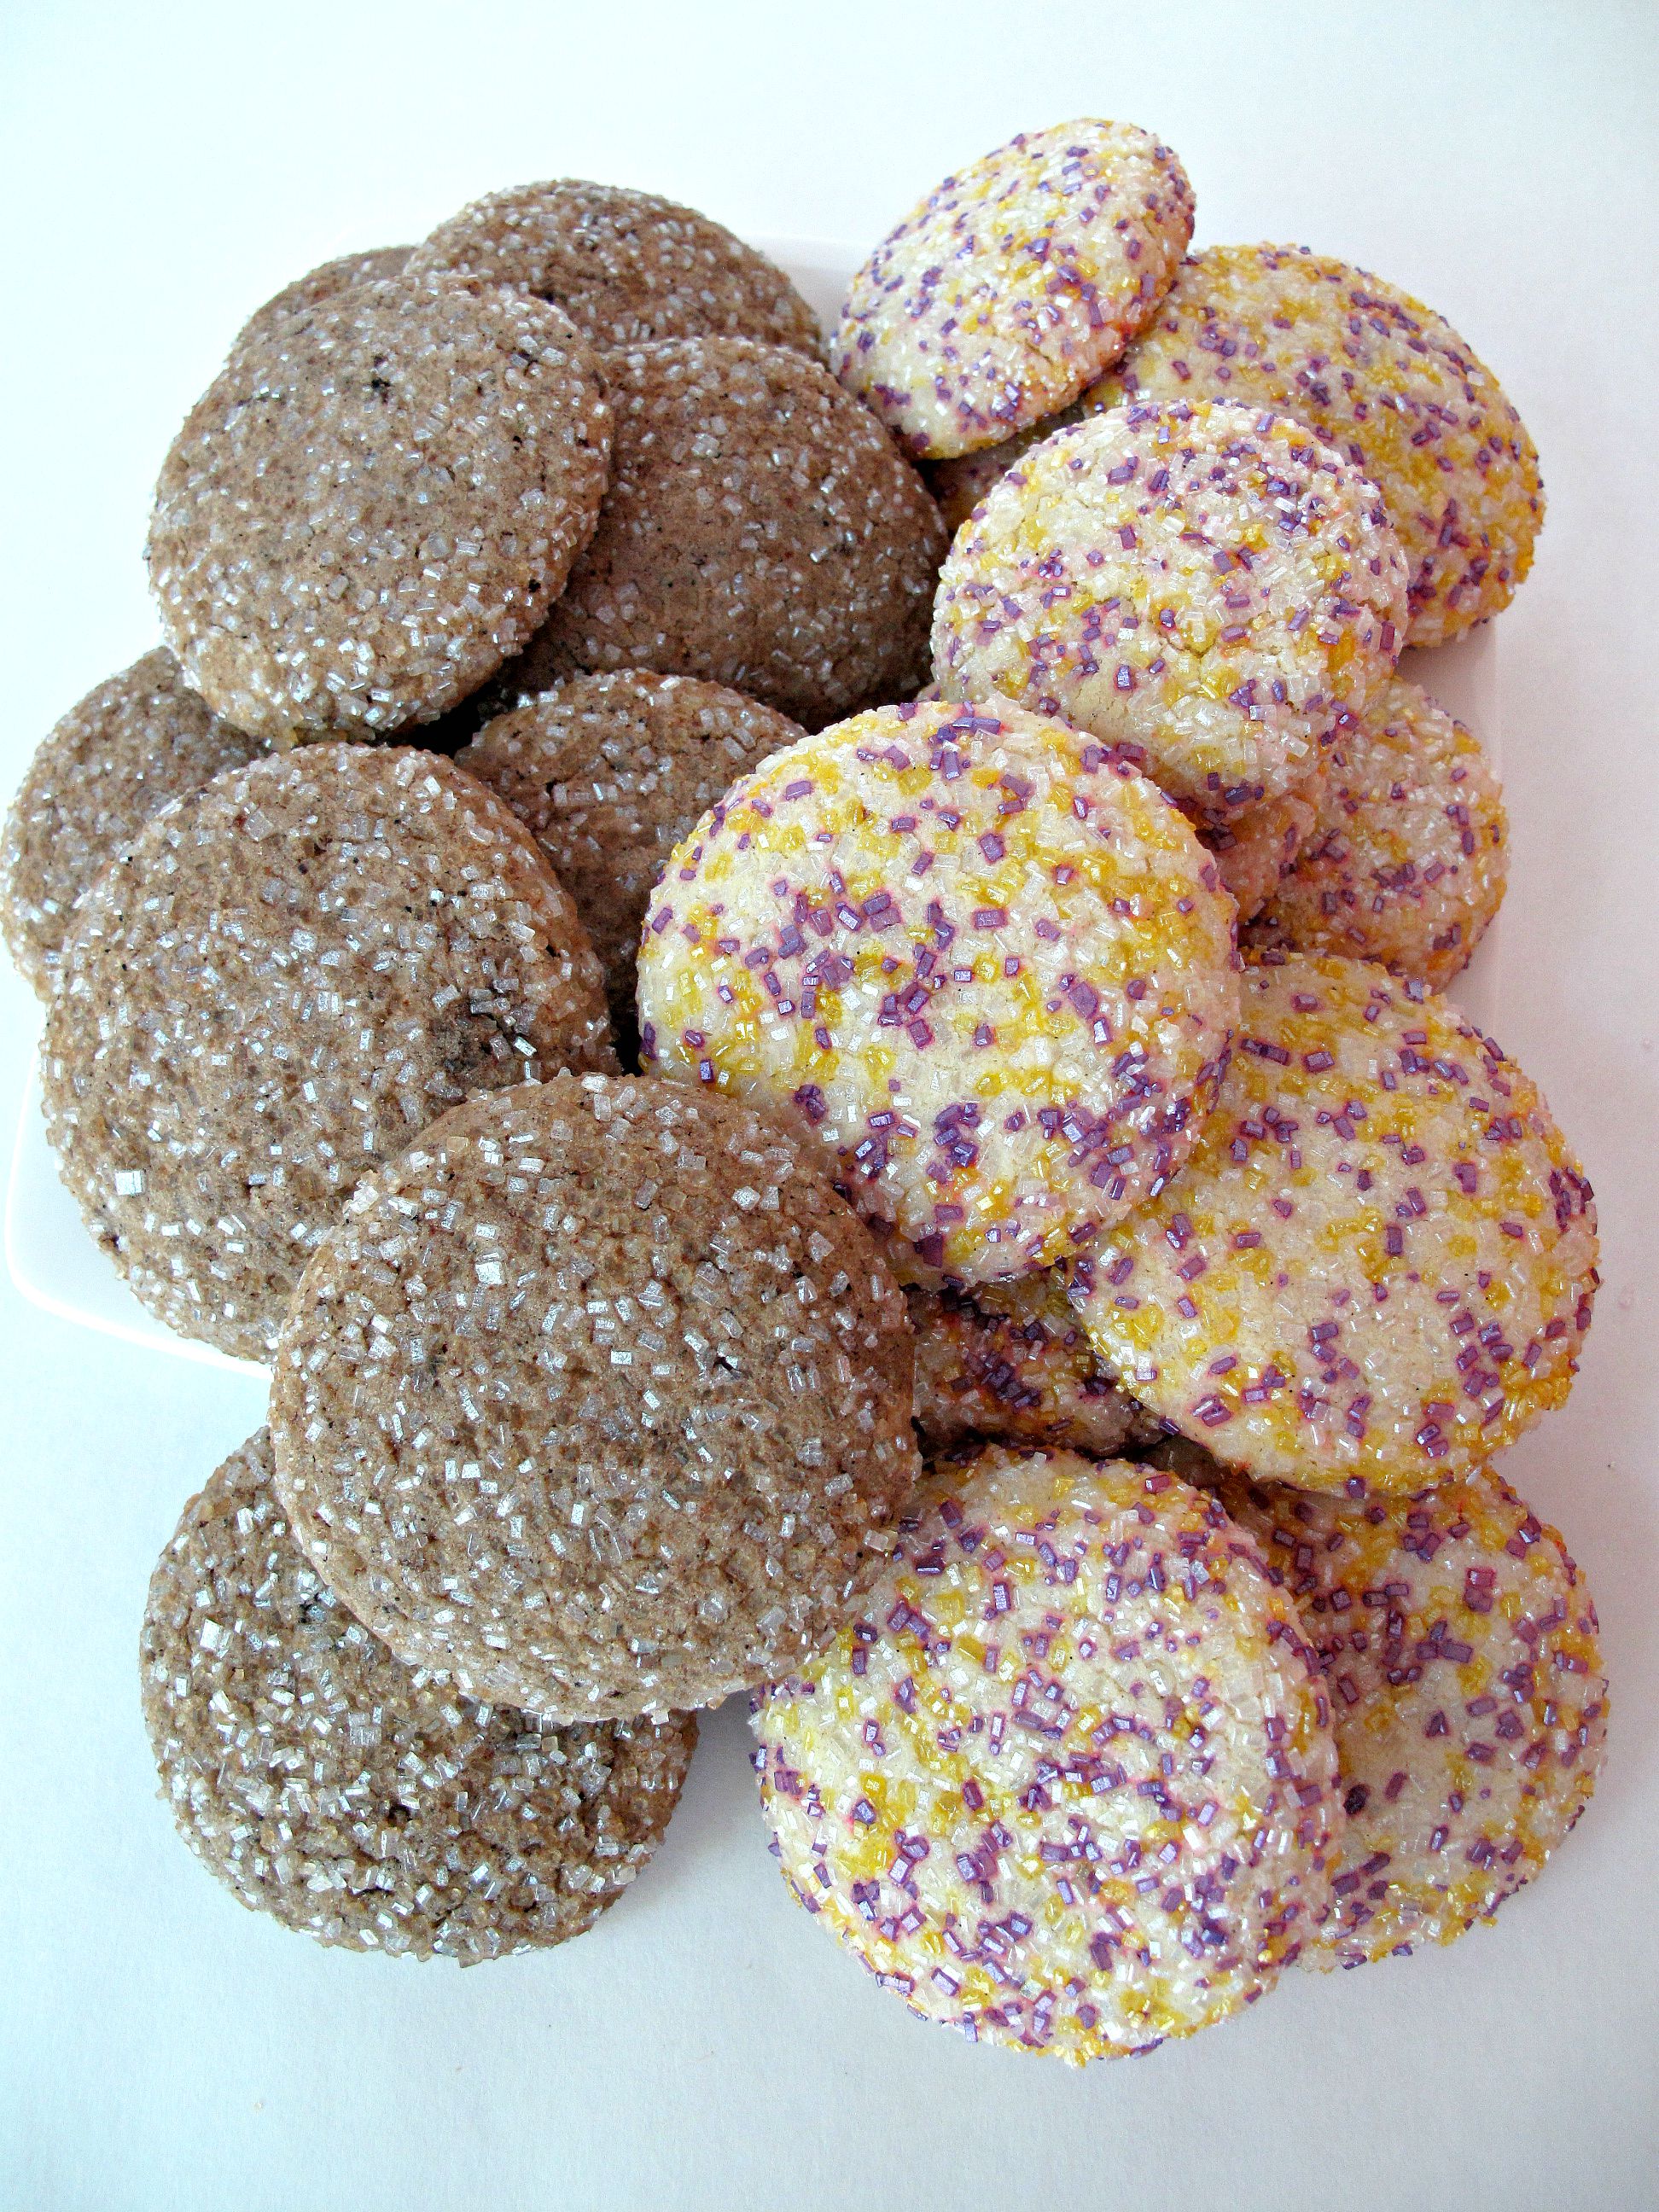 Thick, round Mocha Sugar Cookies and Lavender Lemon Sugar Cookies coated in large crystal sugar.